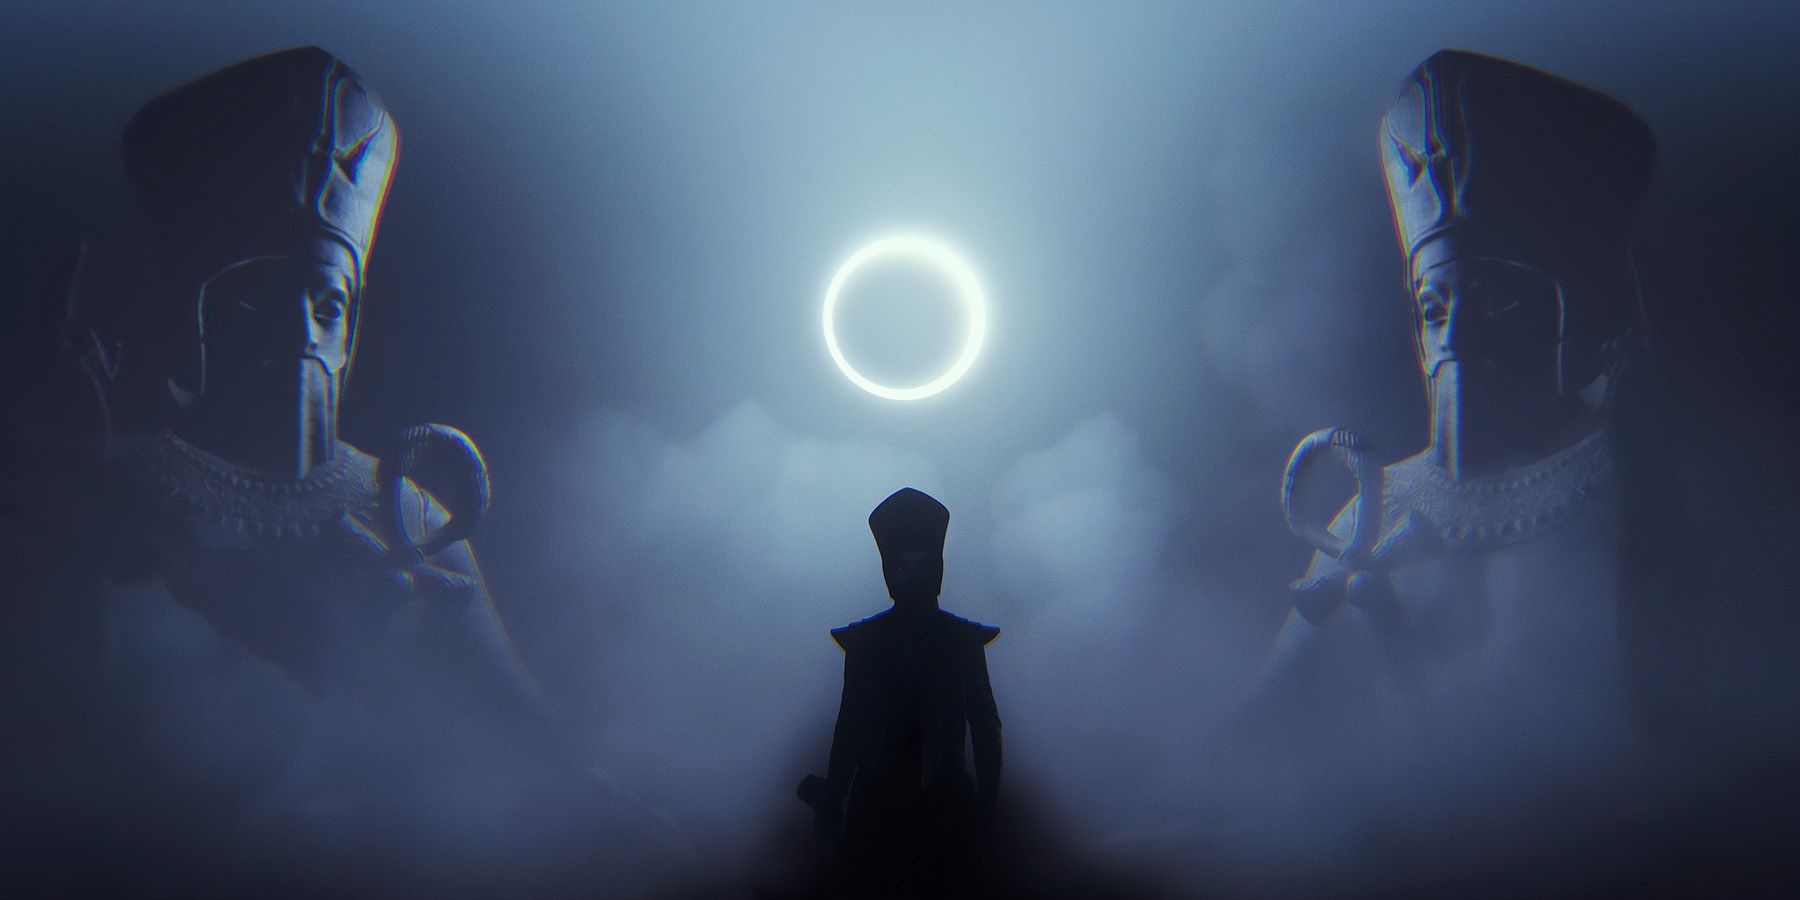 alone-in-the-dark-cinematic-still-game-rant-advance-dark-man-moon-statues-1